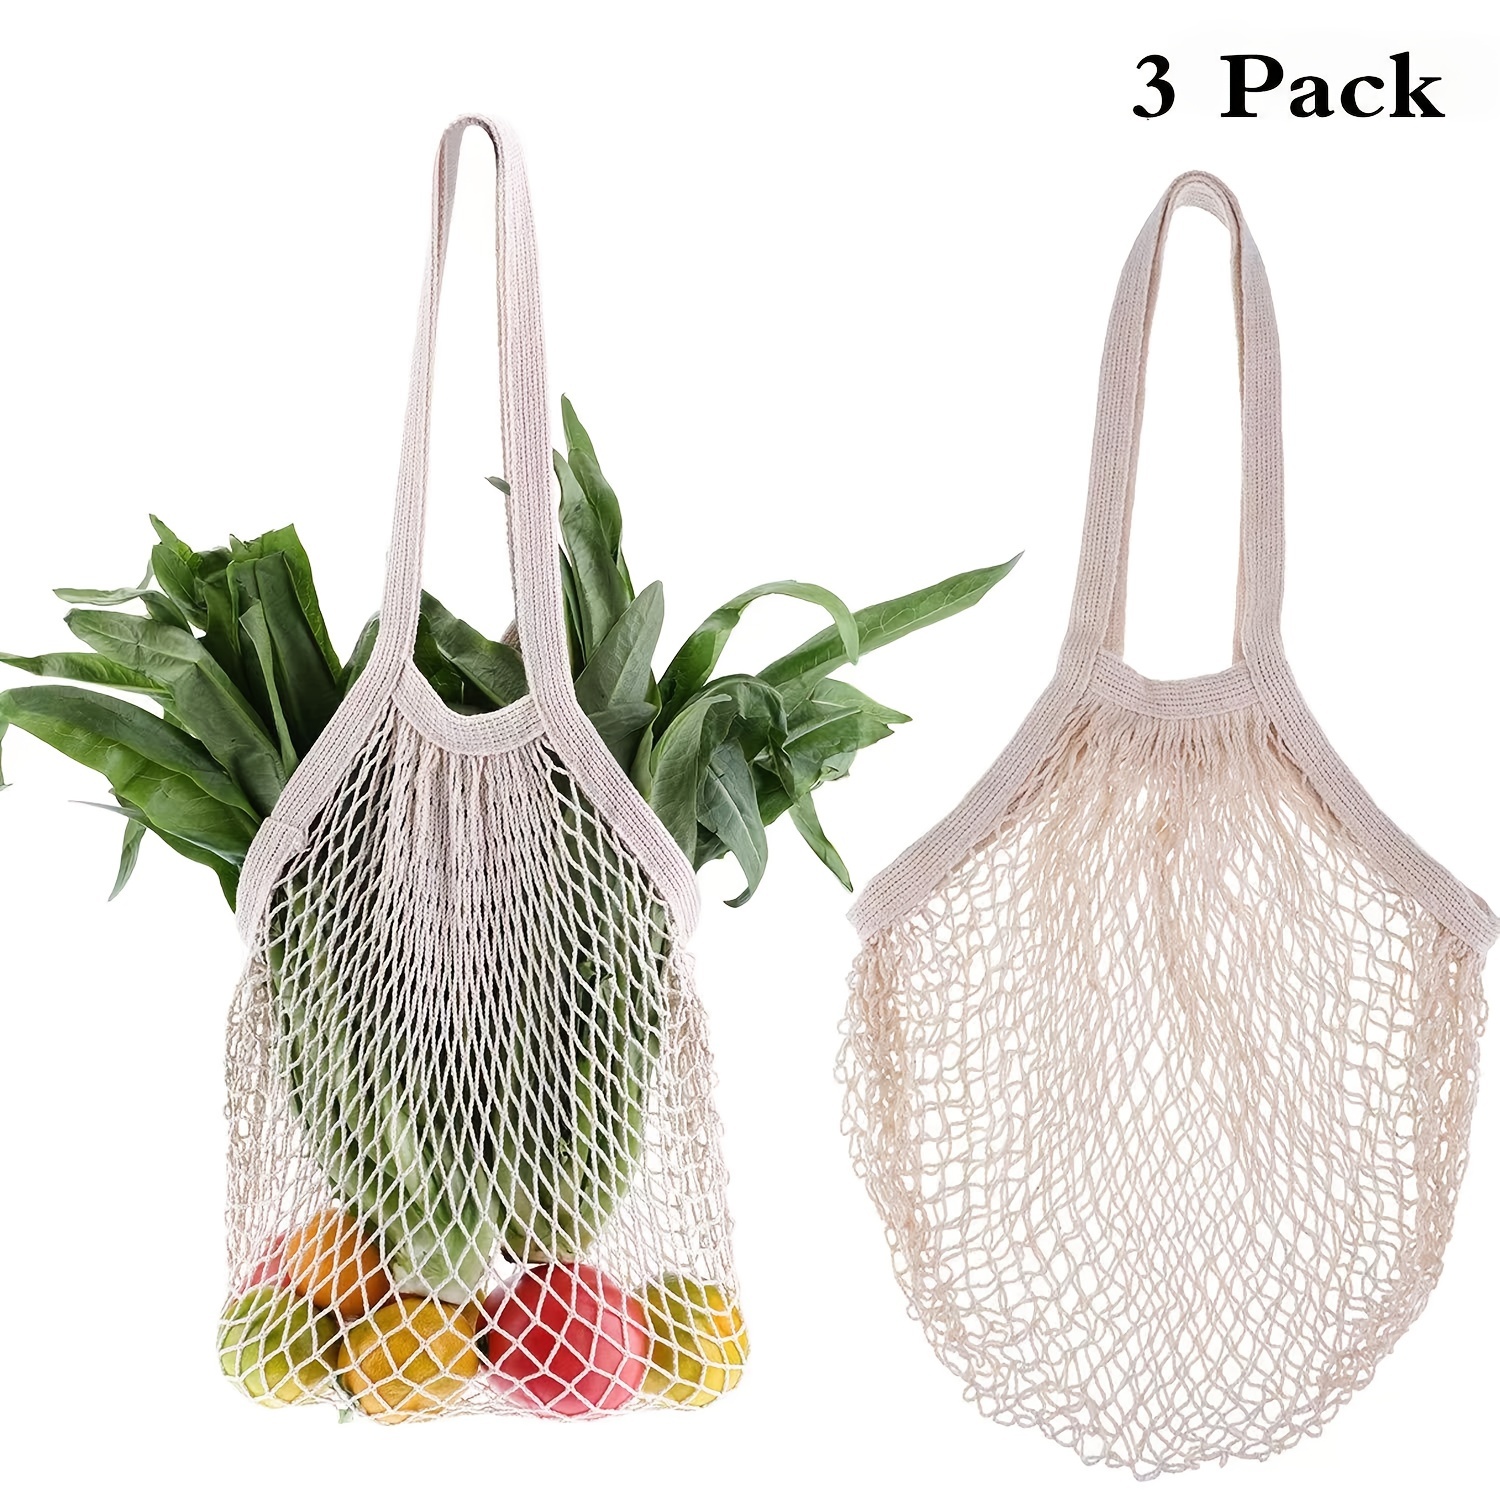 New Mesh String Shopping Bag Fashion Net Bag Reusable Fruit